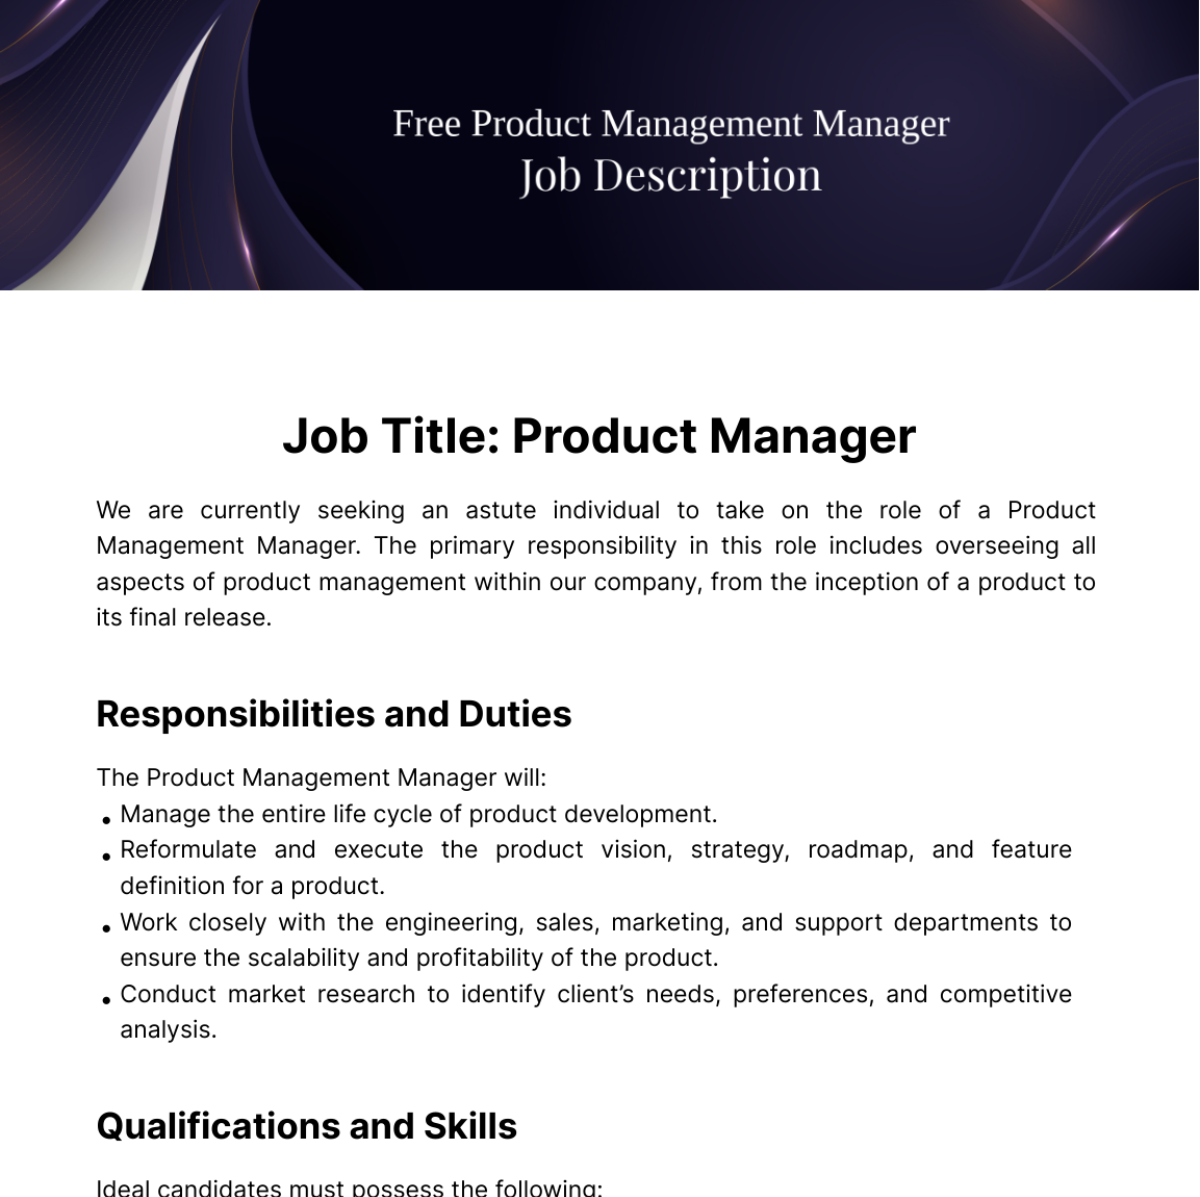 Free Product Management Manager Job Description Template